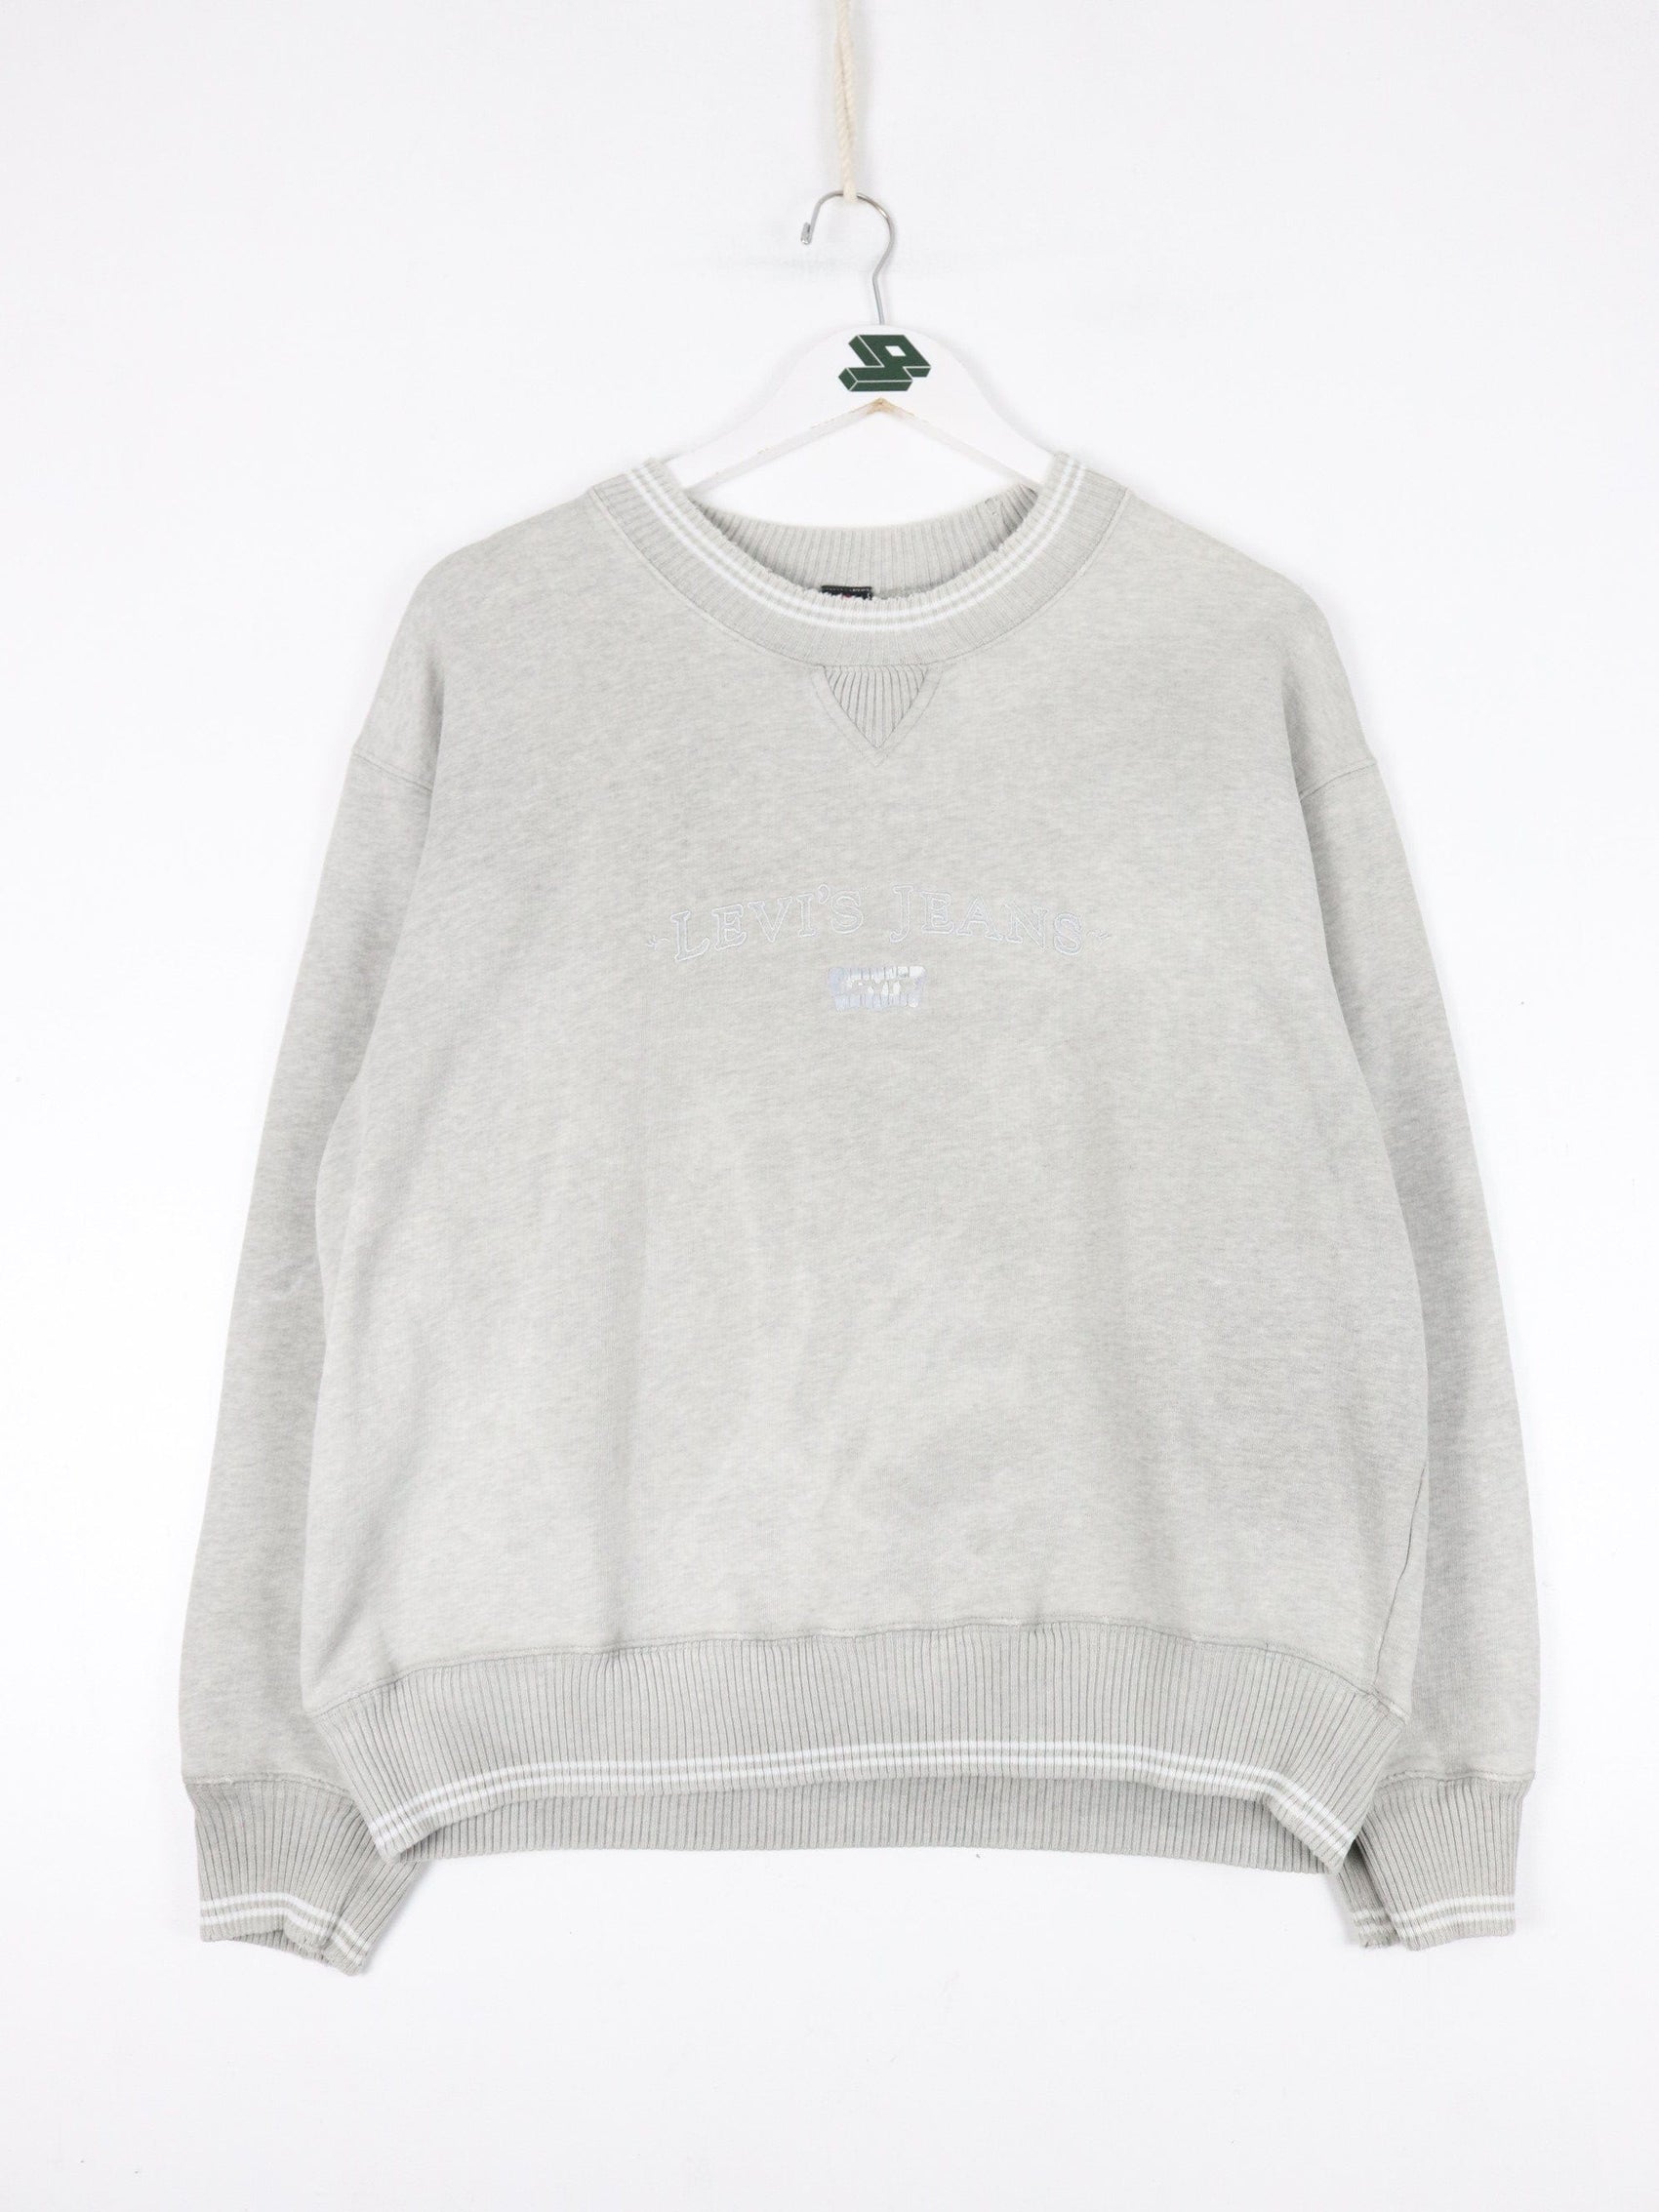 Levi's Sweatshirts & Hoodies Vintage Levi's Sweatshirt Fits Mens Medium Grey